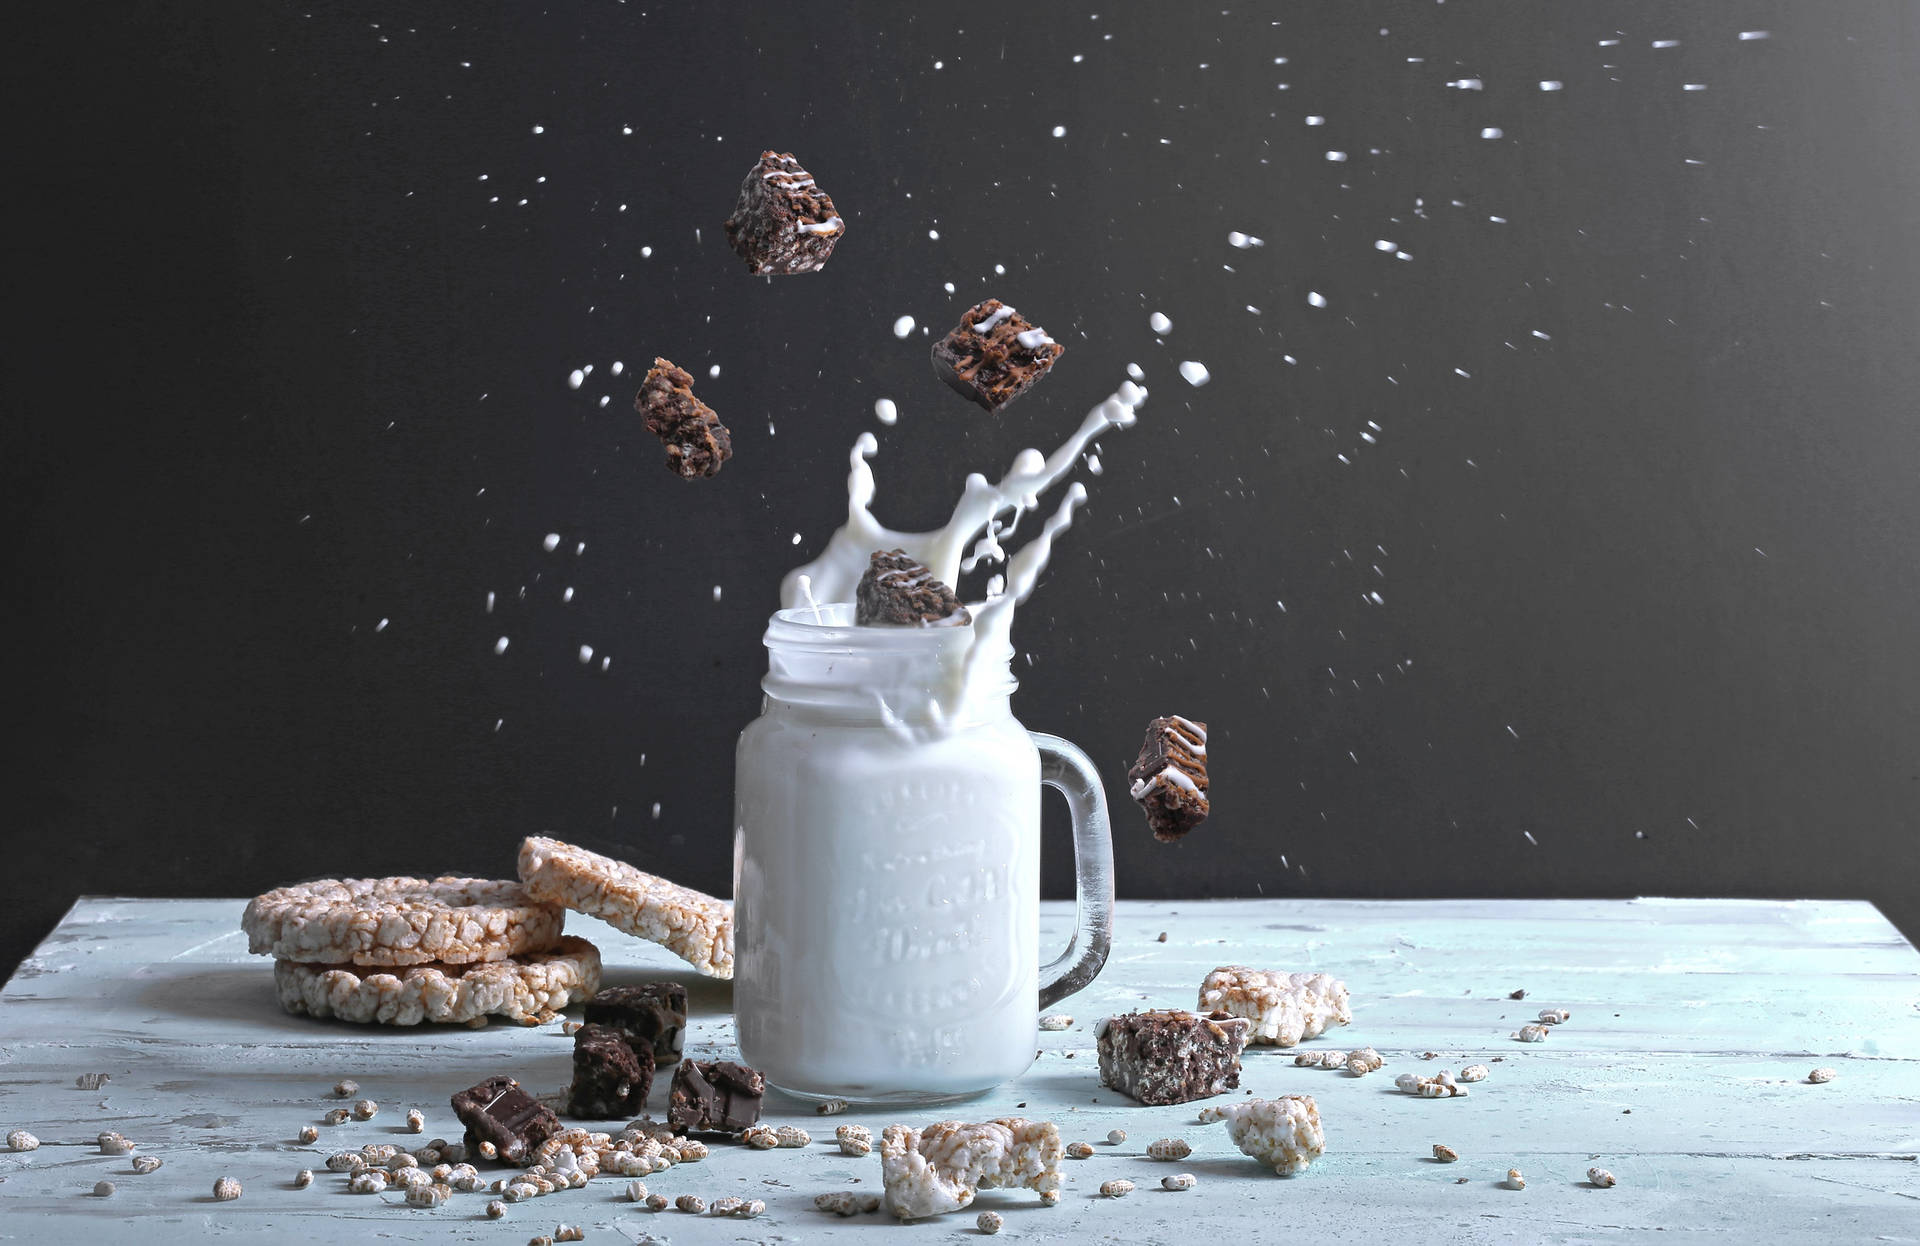 Caption: Delicious Fudge Brownies Splashing Into Fresh Milk Background